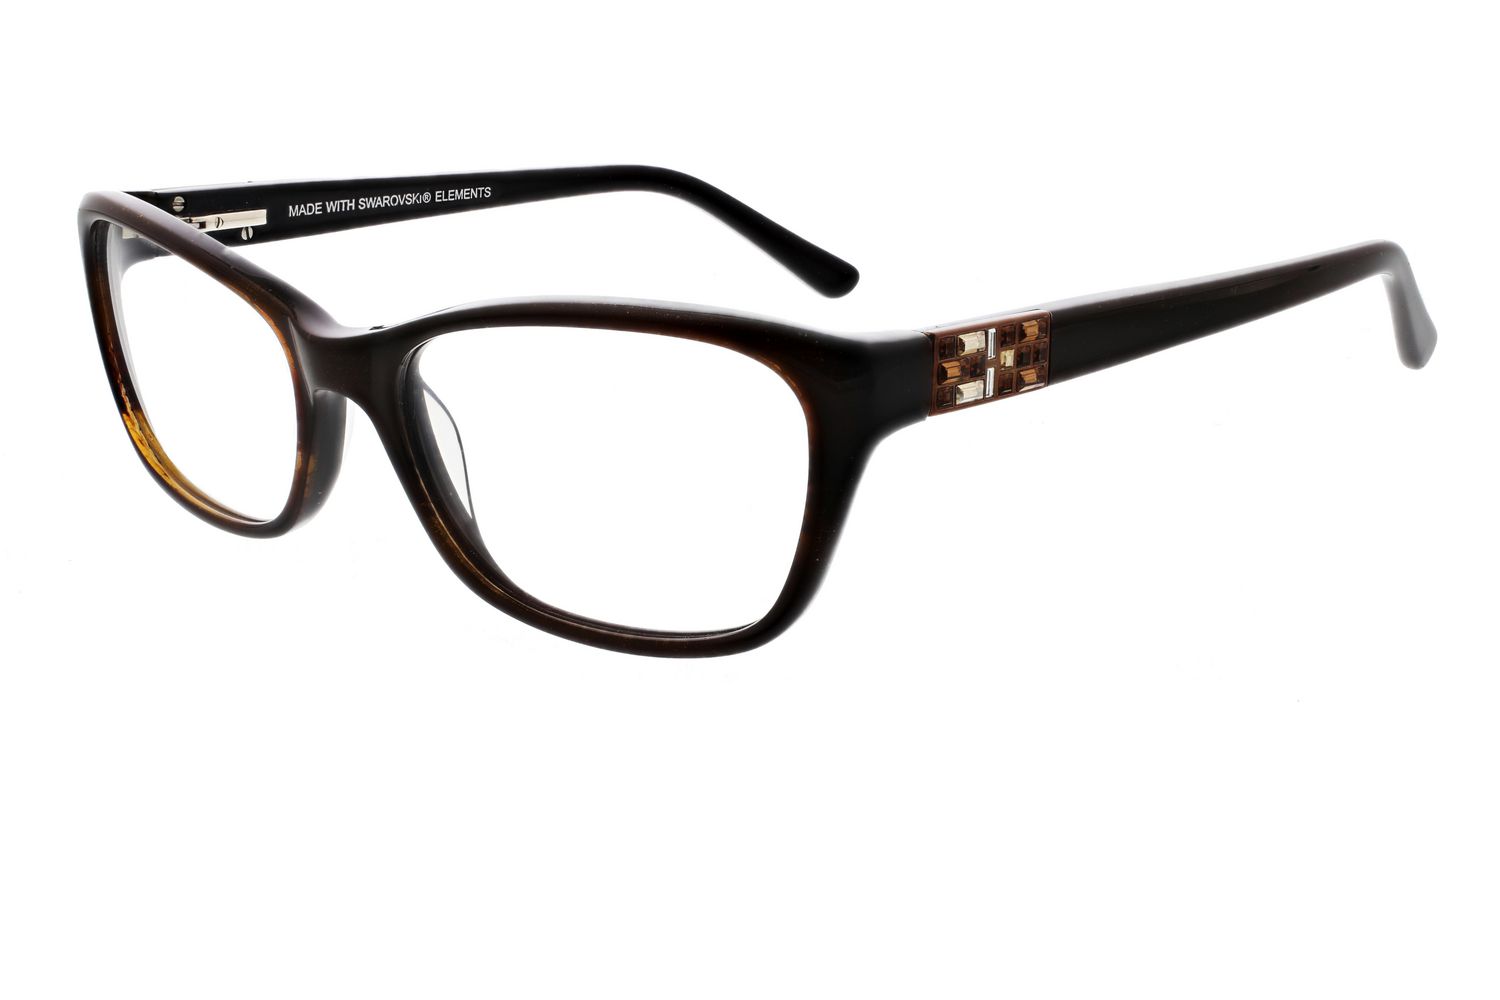 Luxe WLO337 Women's Brown Eyeglasses | Walmart Canada